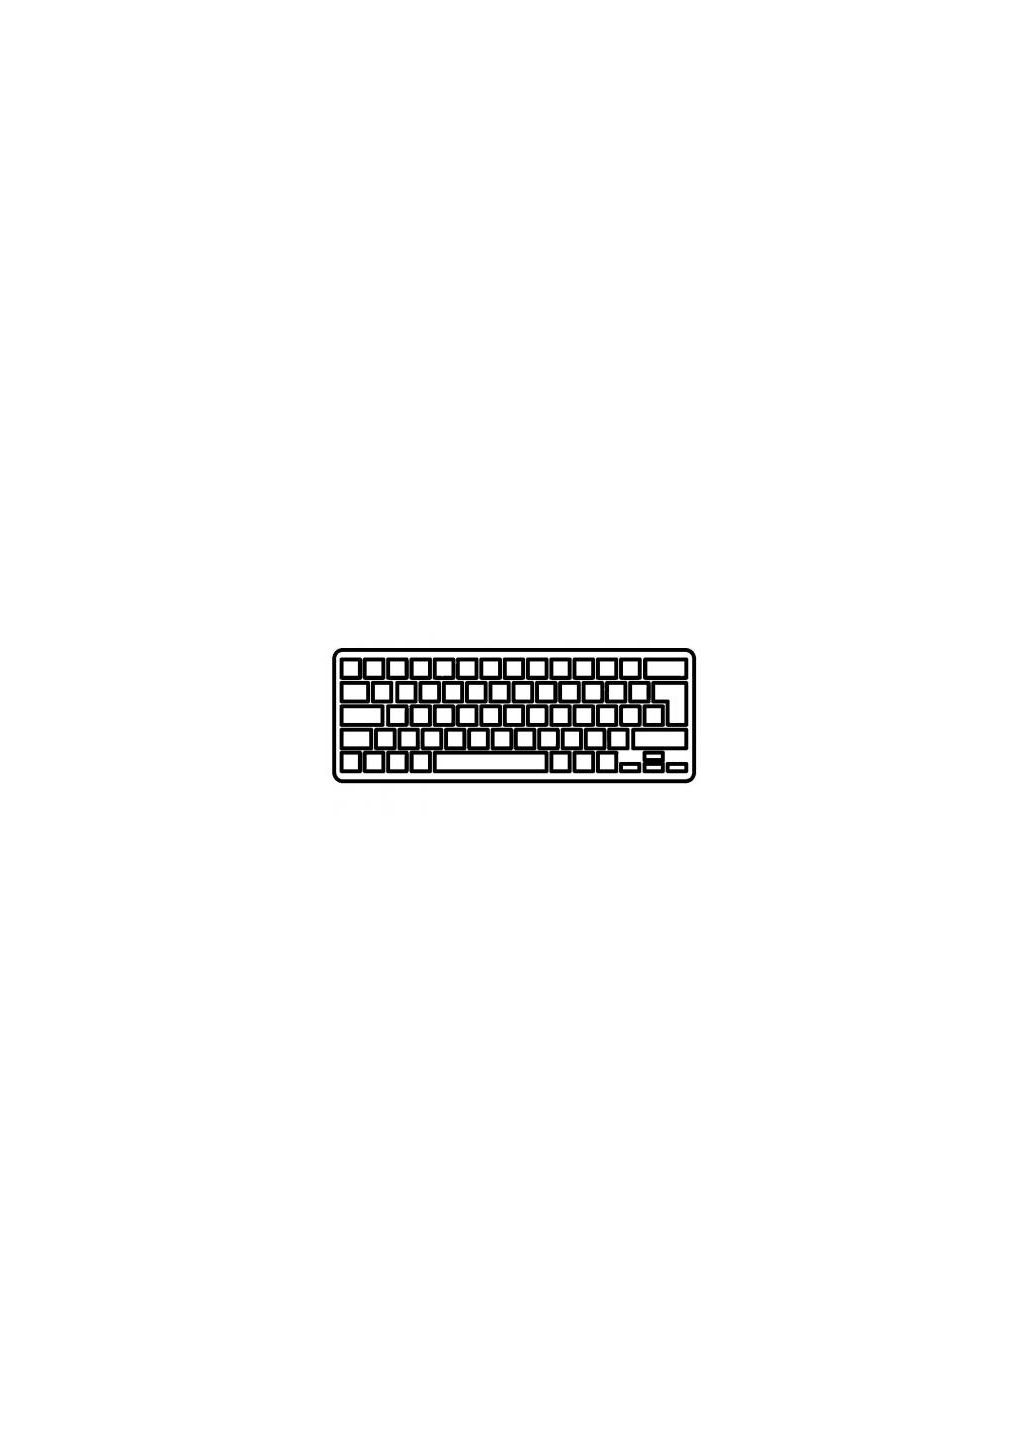 Клавиатура ноутбука E200 светлосерая RU (A43148) LG e200 светло-серая ru (276707436)